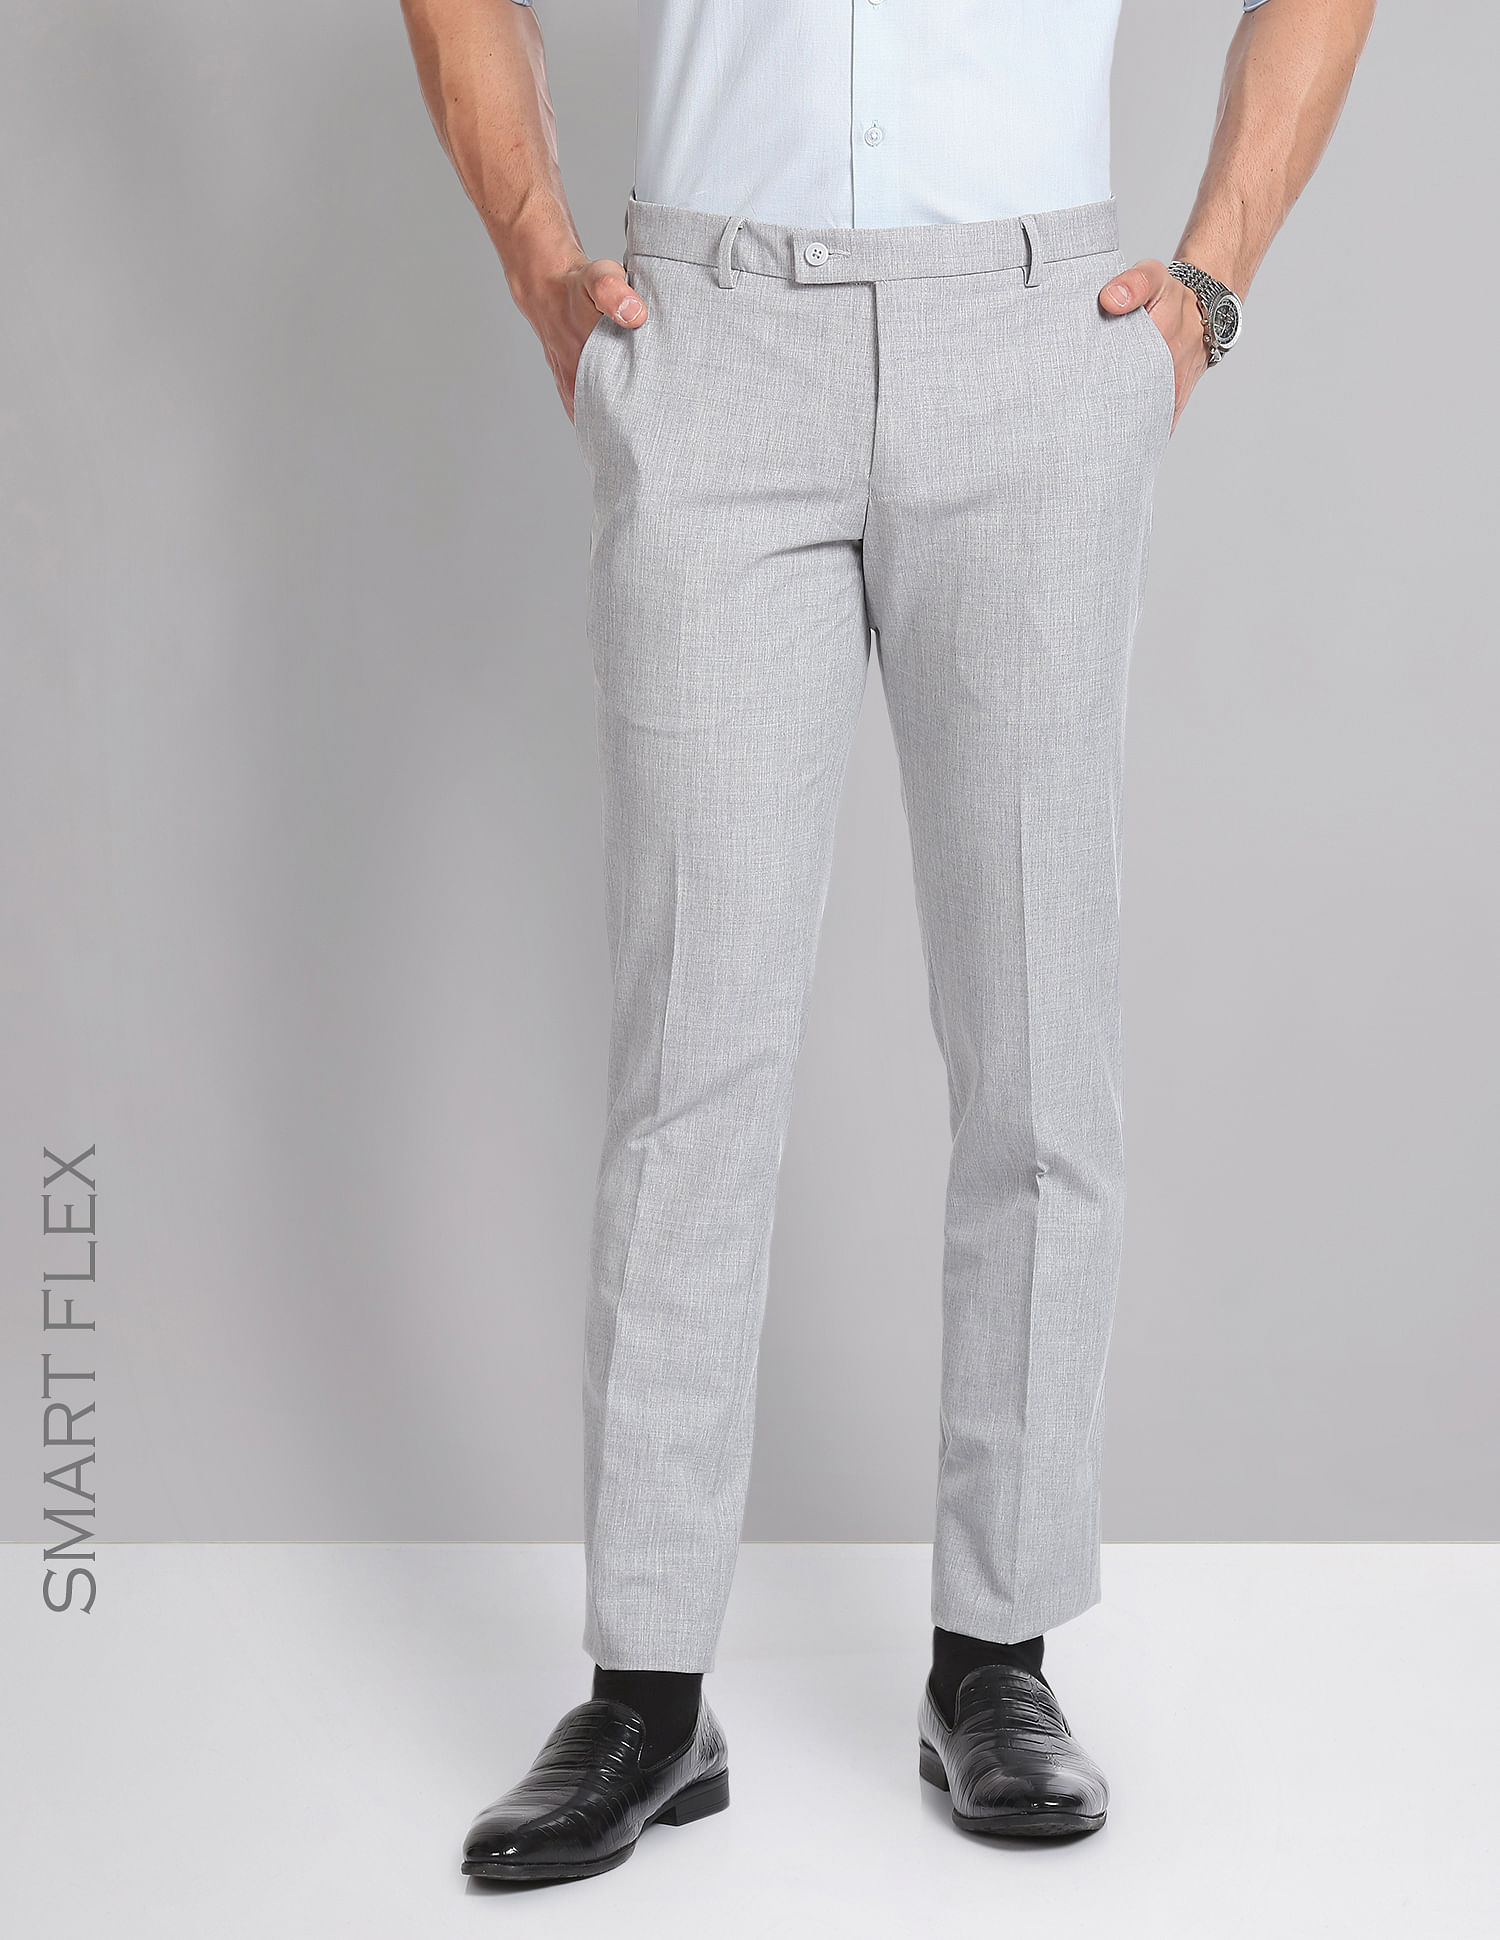 Fashion Corporate Smart Fit Men's Pant Trouser Grey | Jumia Nigeria